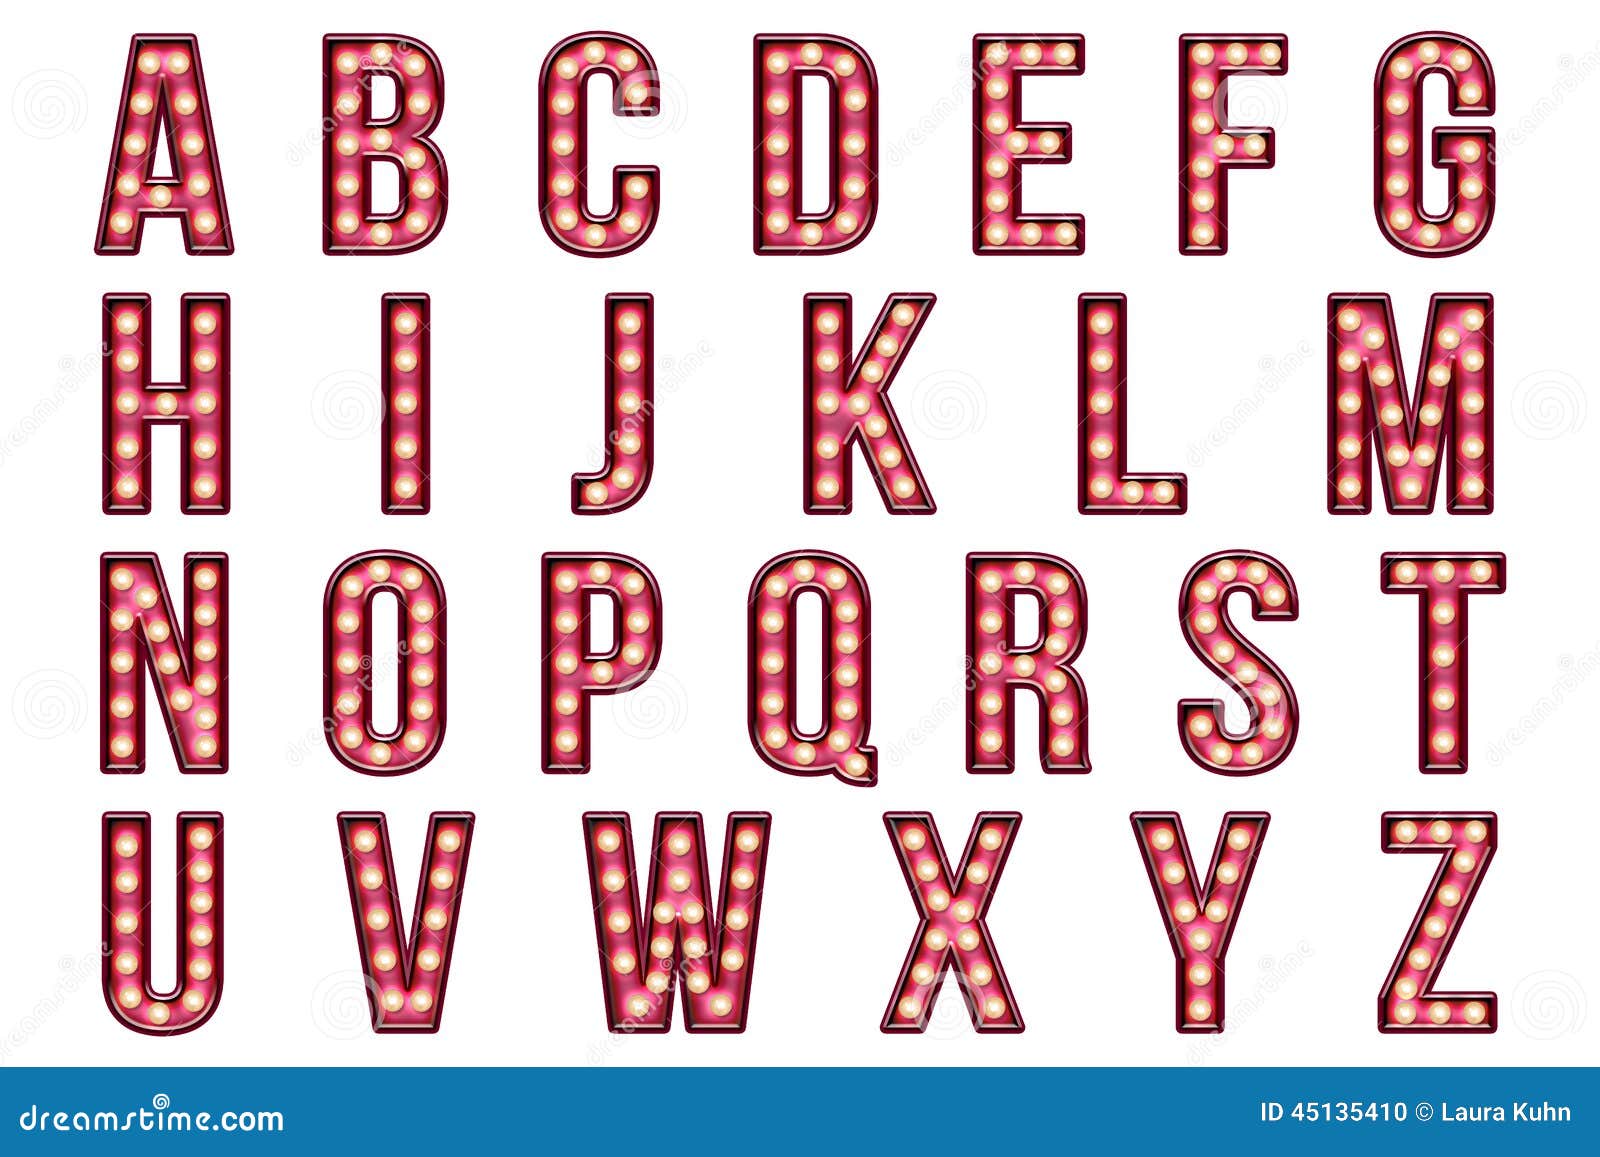 digital scrapbook alphabet burlesque marquee